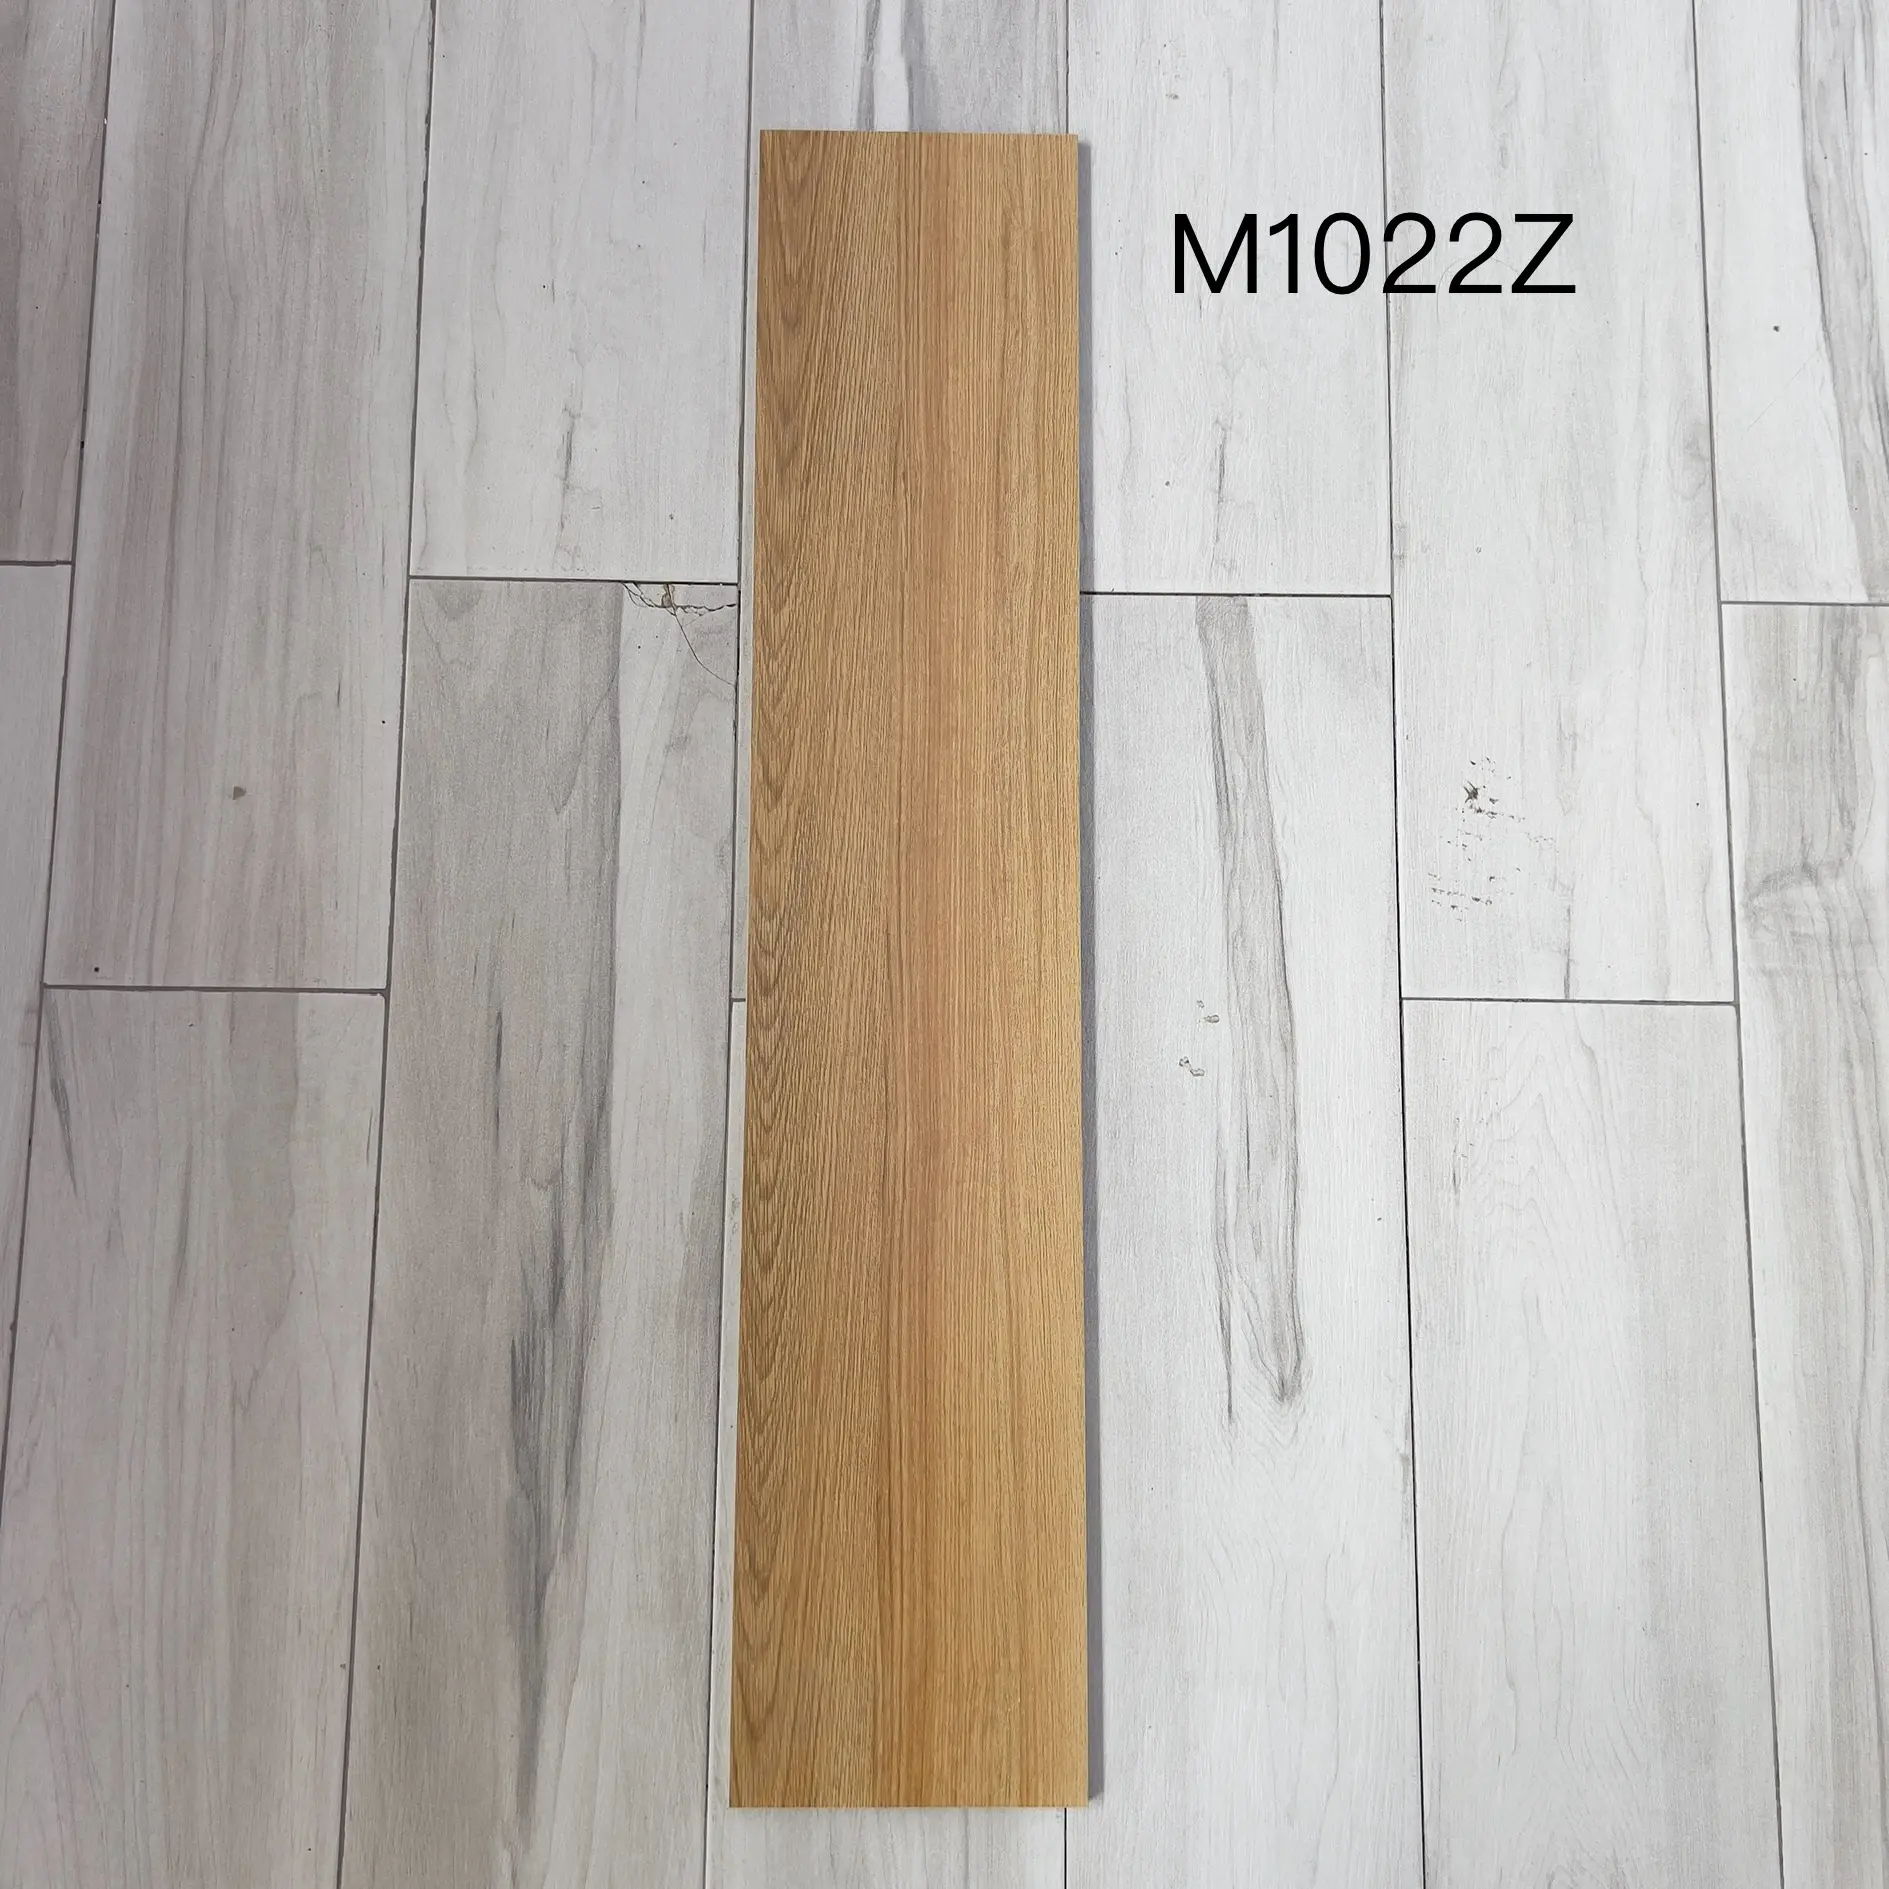 उच्च गुणवत्ता 200x1000 मिमी चमकता हुआ चीनी मिट्टी के बरतन मैट टाइल गैर पर्ची ठोस लकड़ी नकली बनावट इनडोर फर्श कस्टम आकार लकड़ी टाइलें